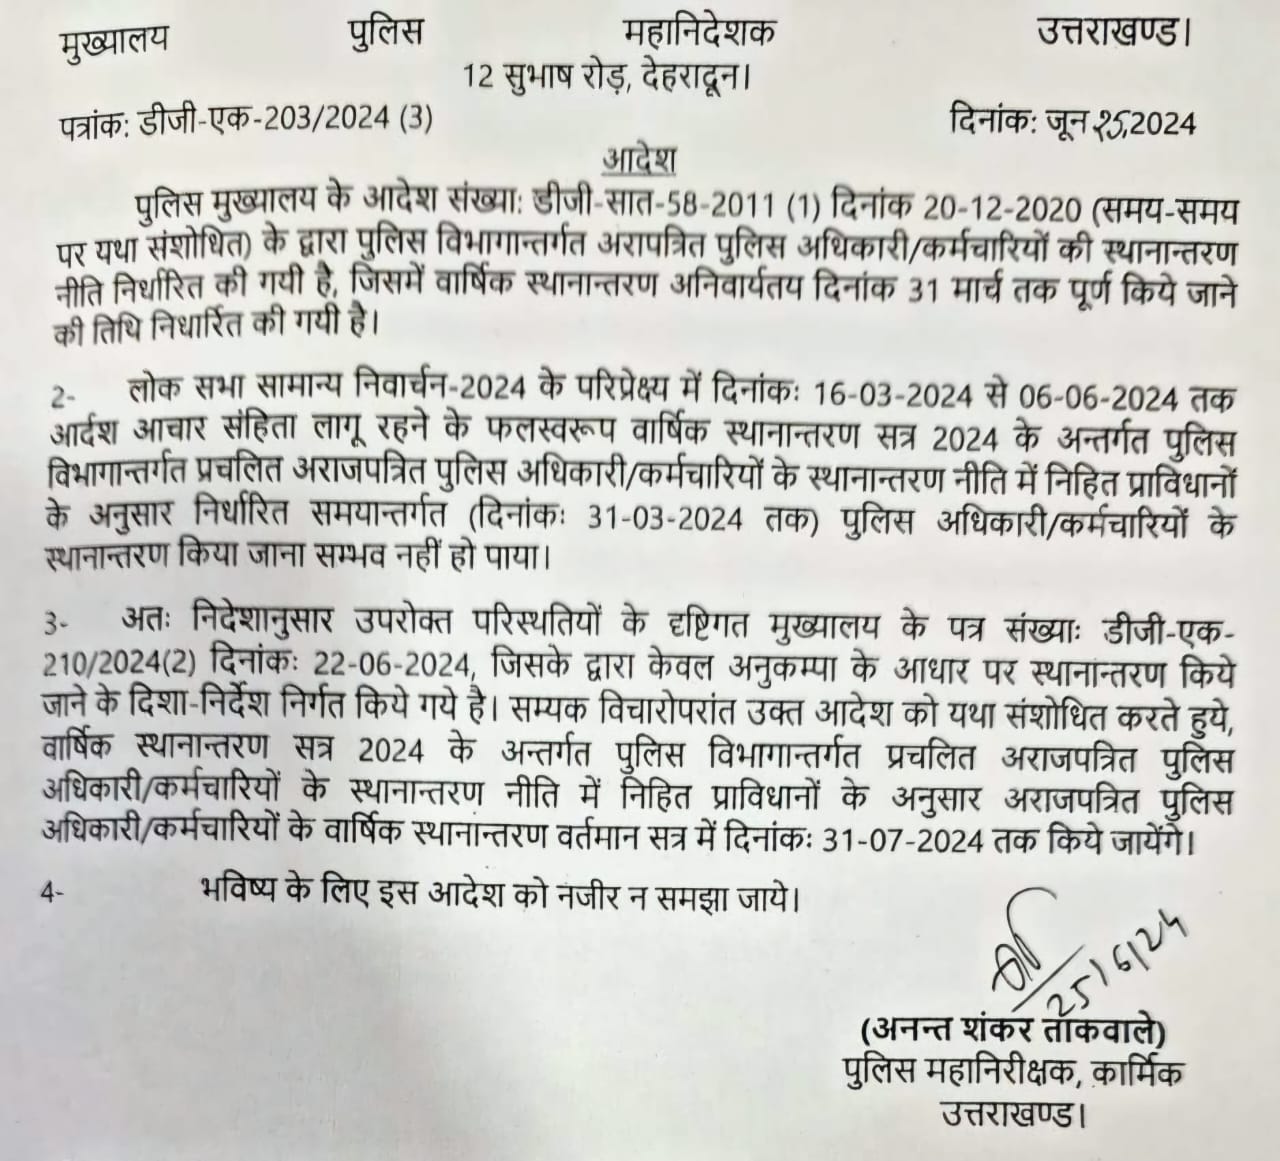 Copy of order by Uttarakhand Police